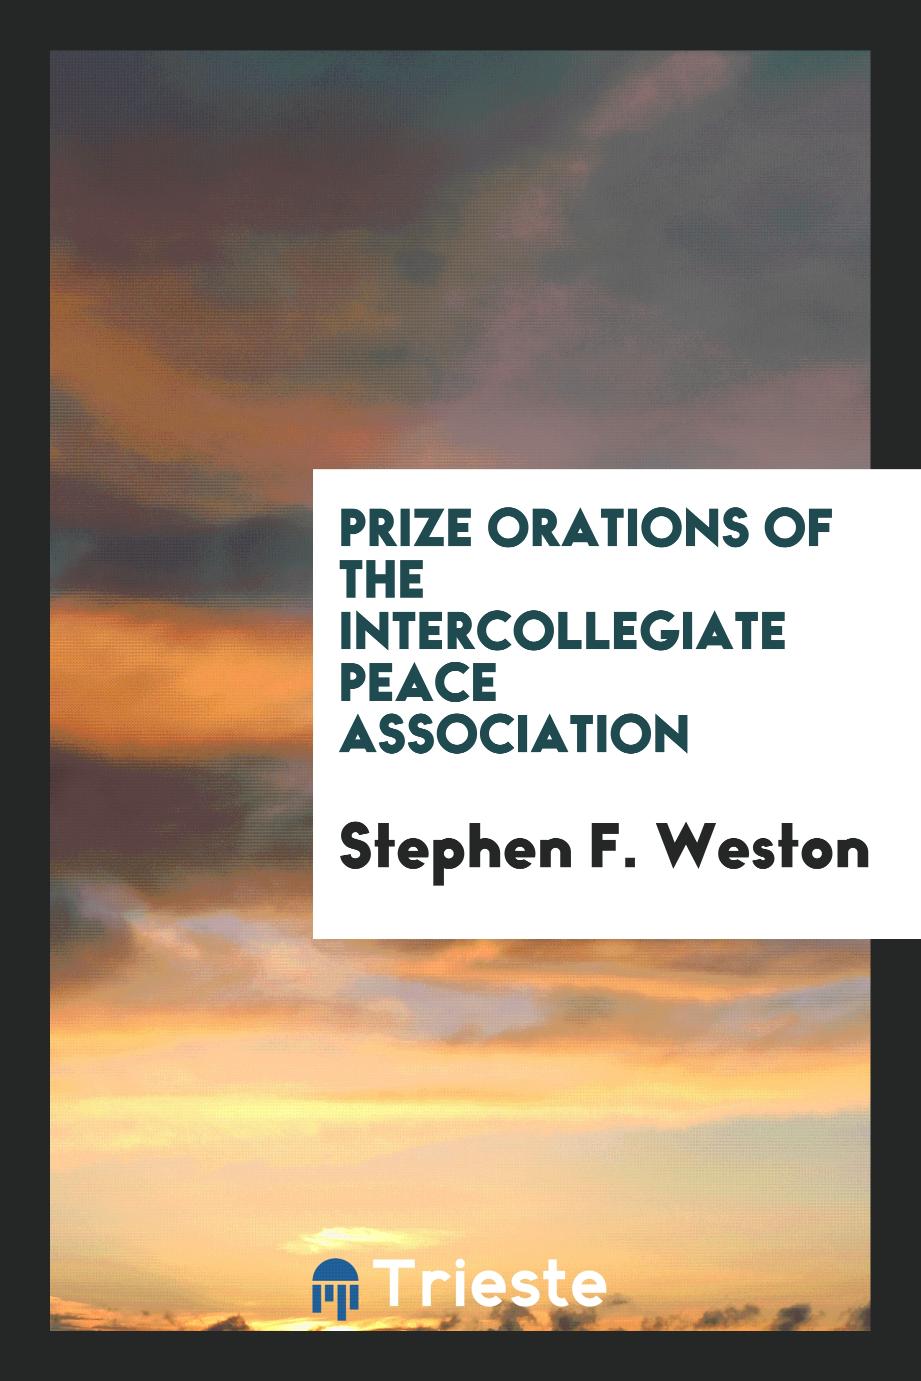 Prize orations of the Intercollegiate peace association